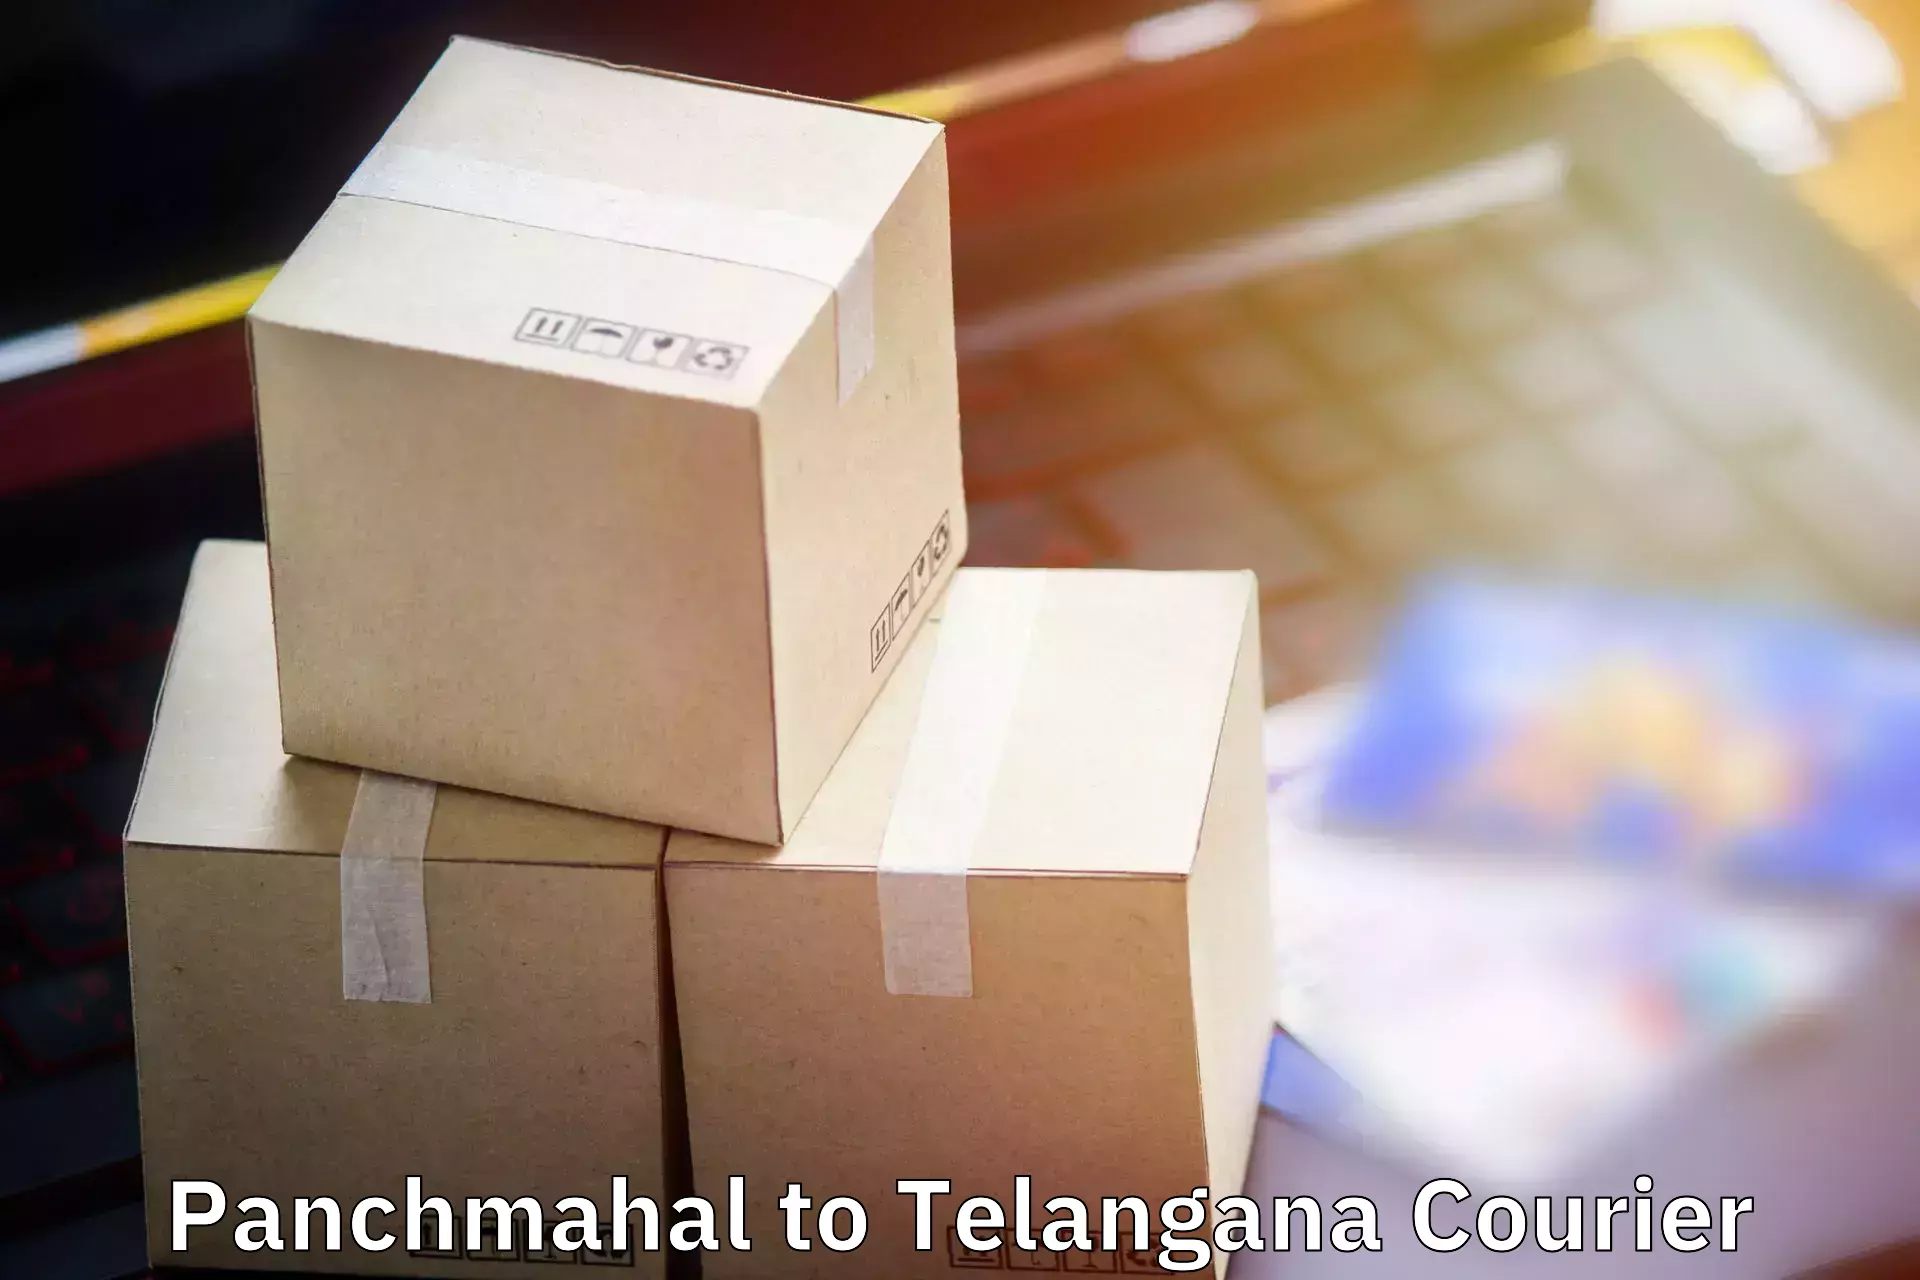 Luggage transfer service Panchmahal to Yellareddy